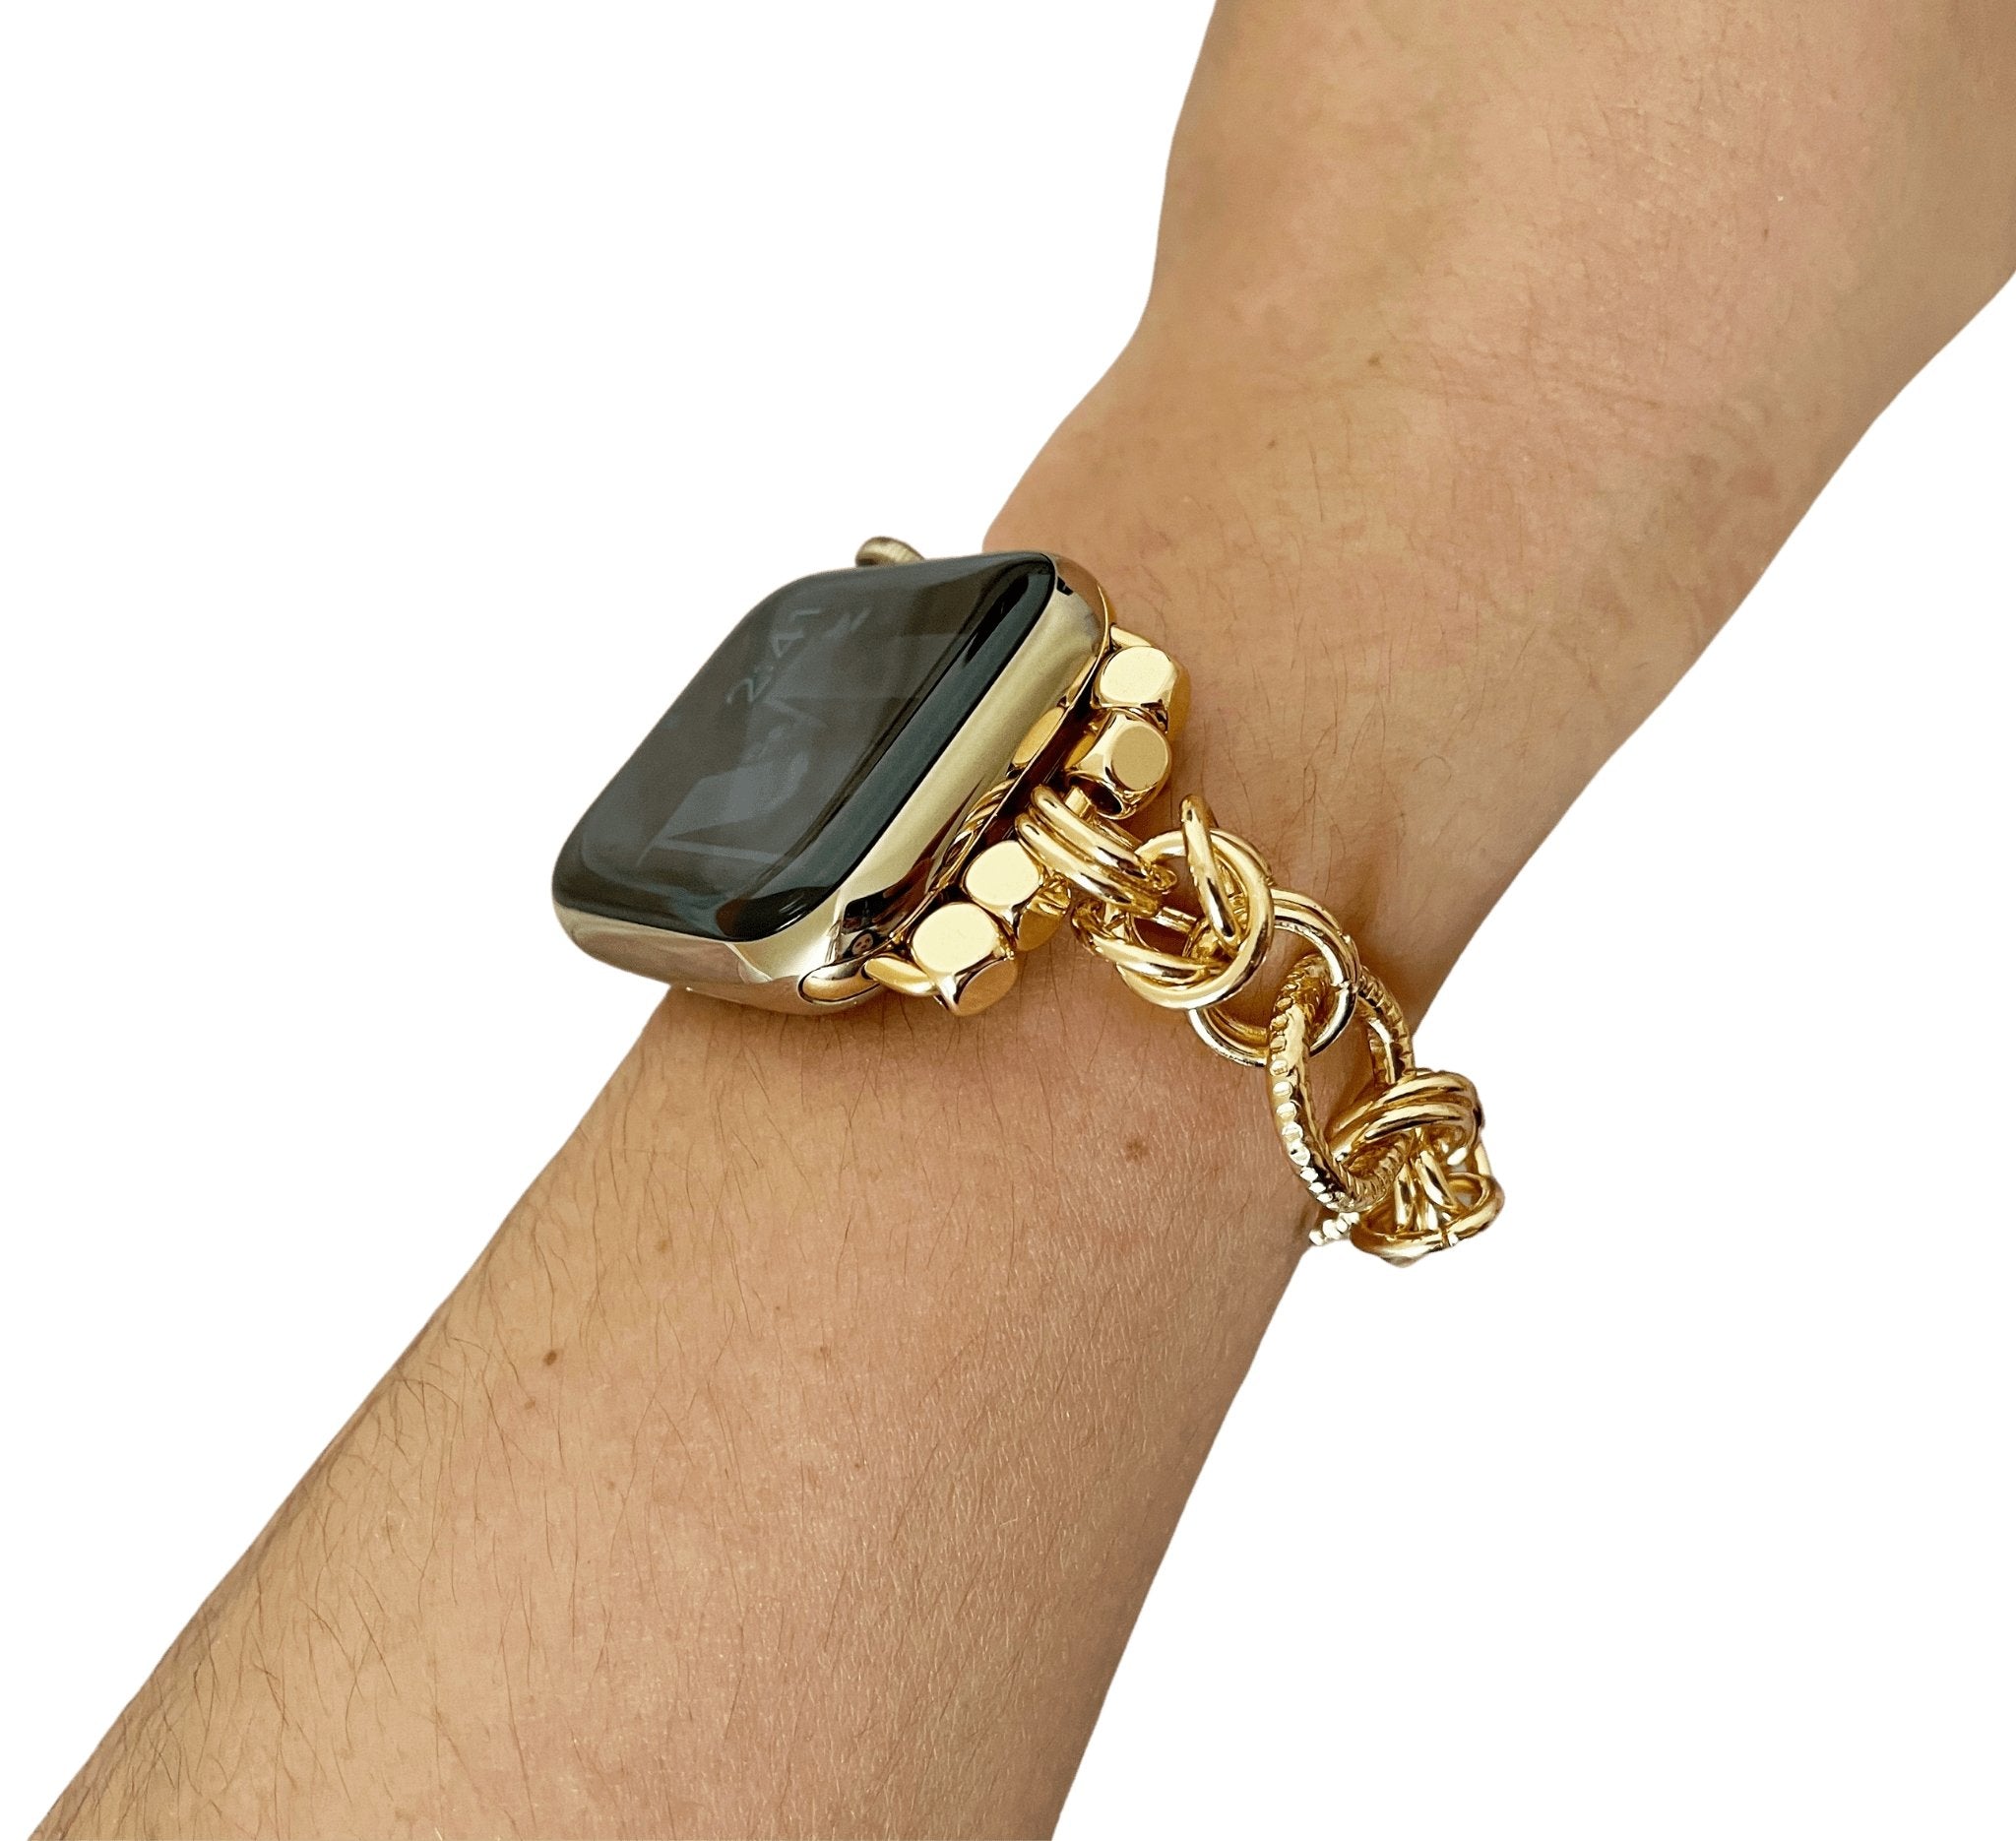 Boho Gold Twisted Chain Watch Bracelet Band - Mareevo